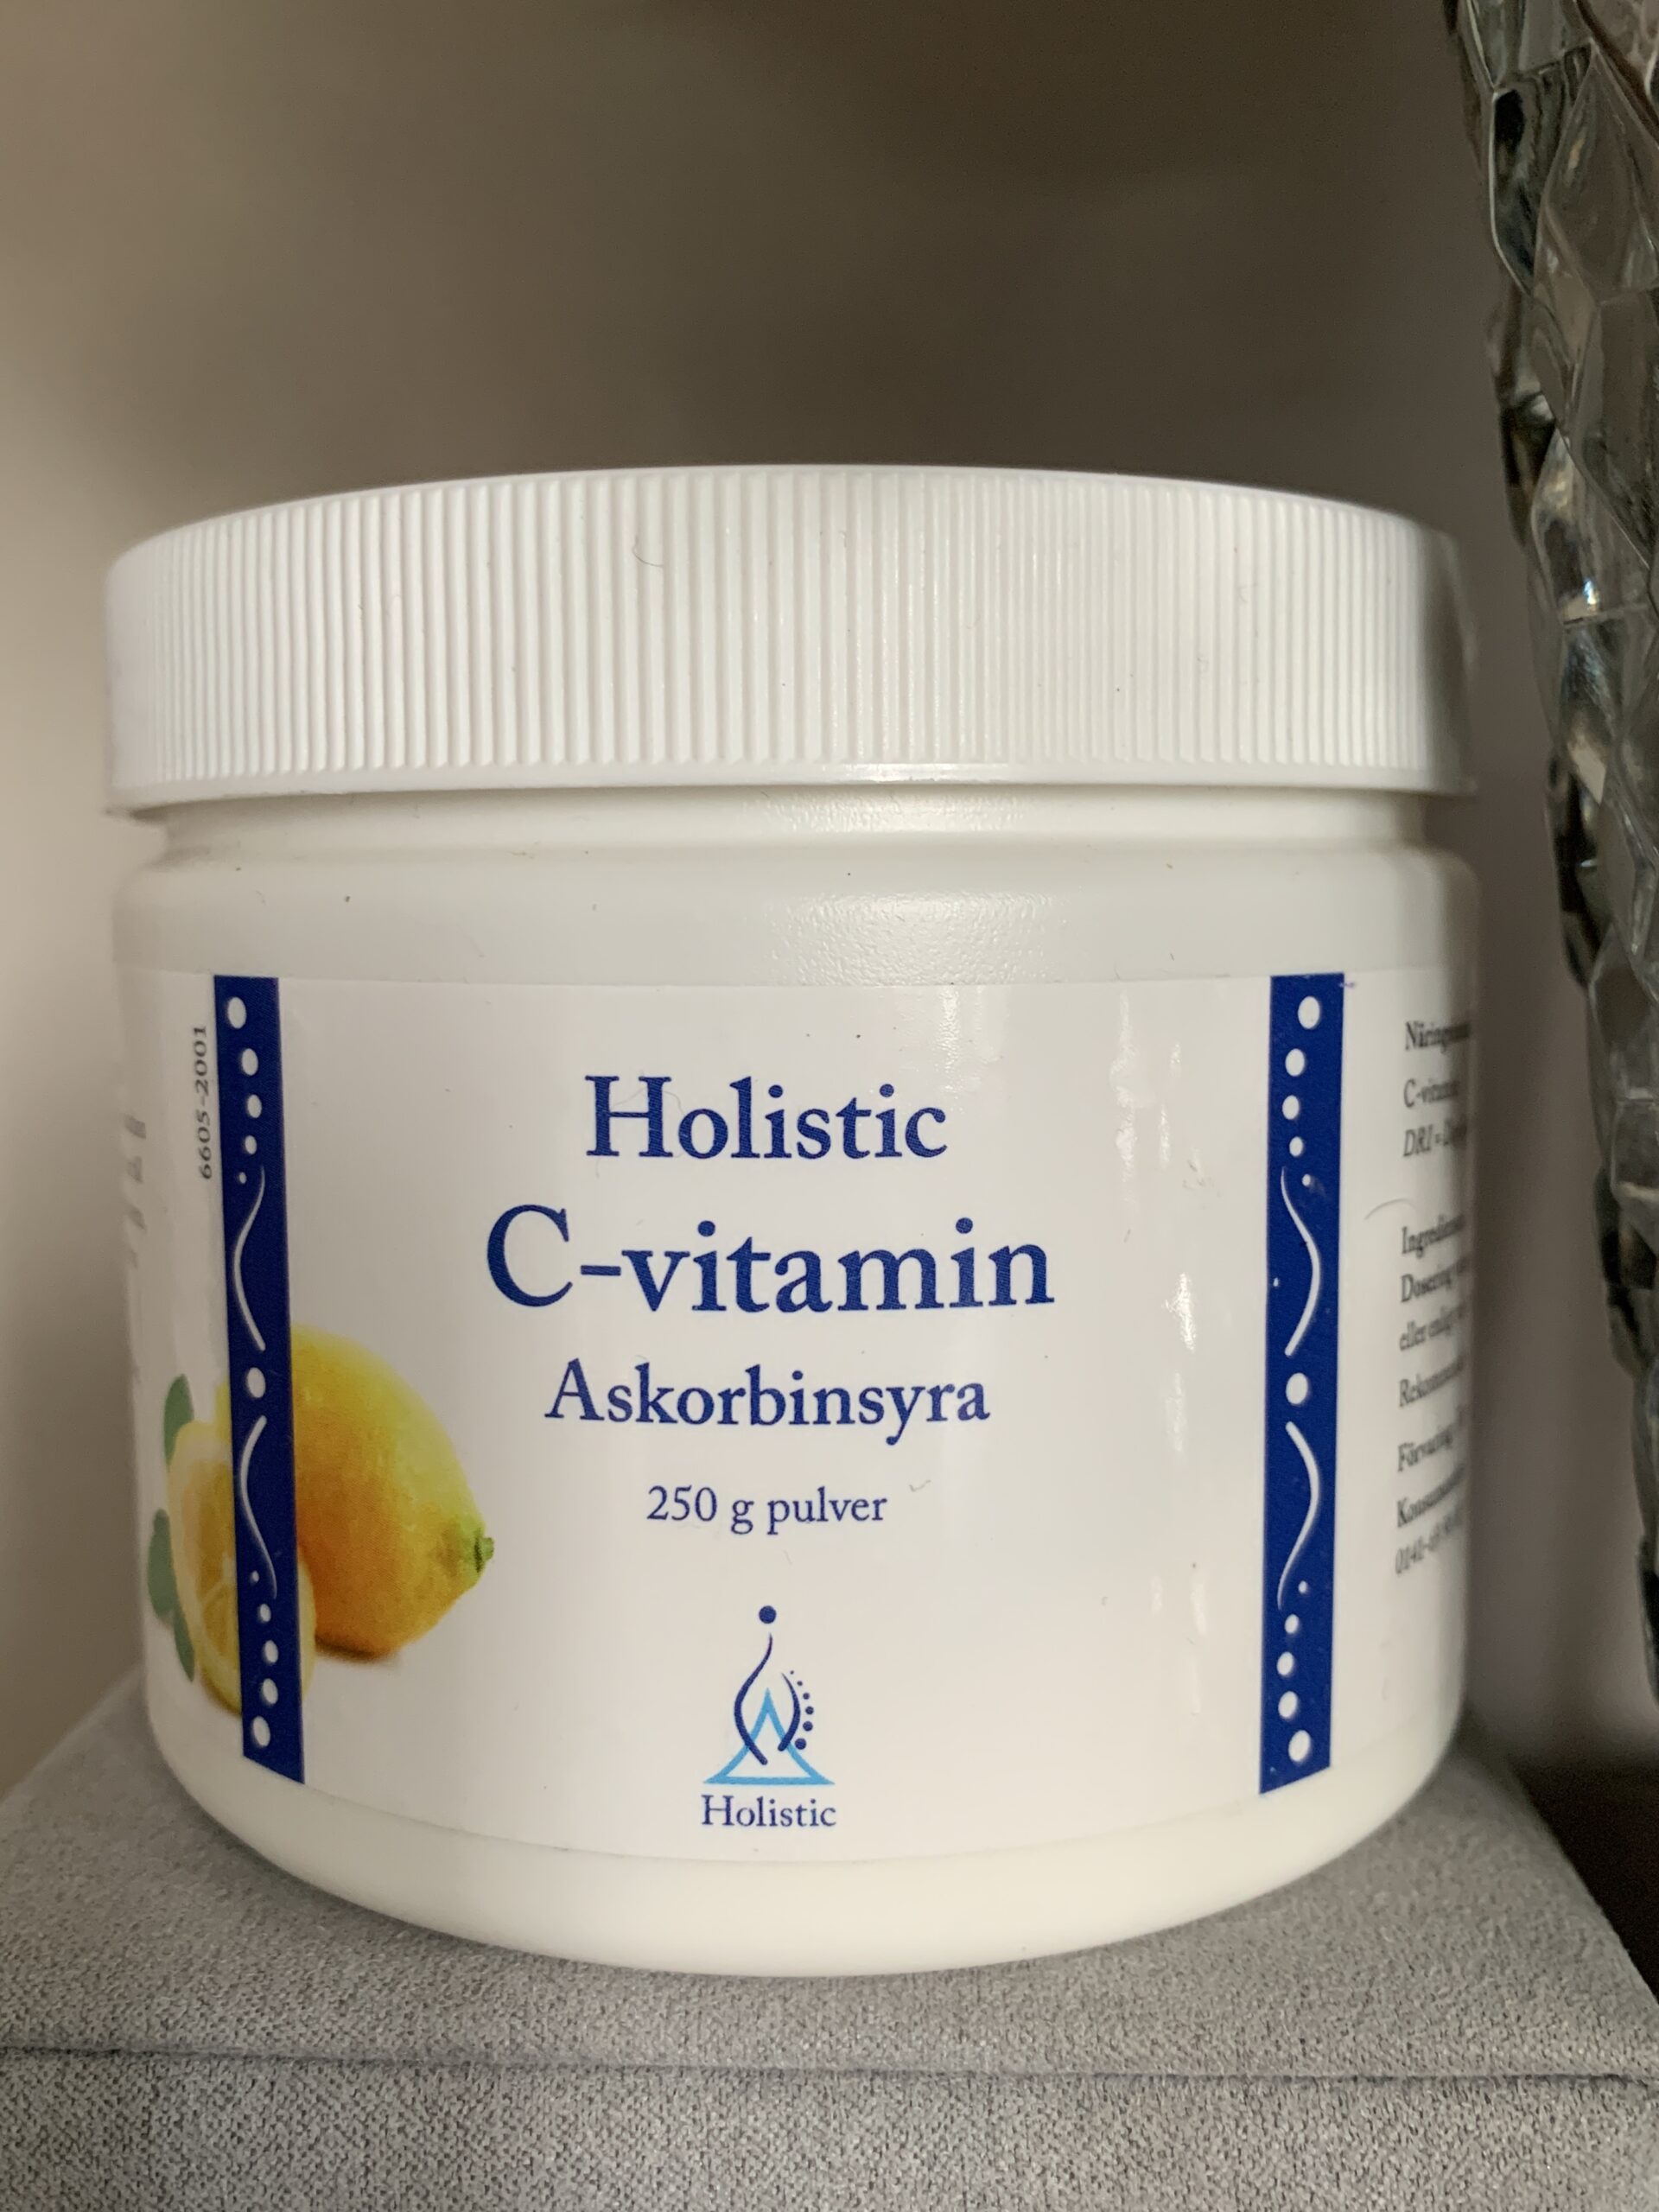 Holistic C-vitamin askorbinsyra